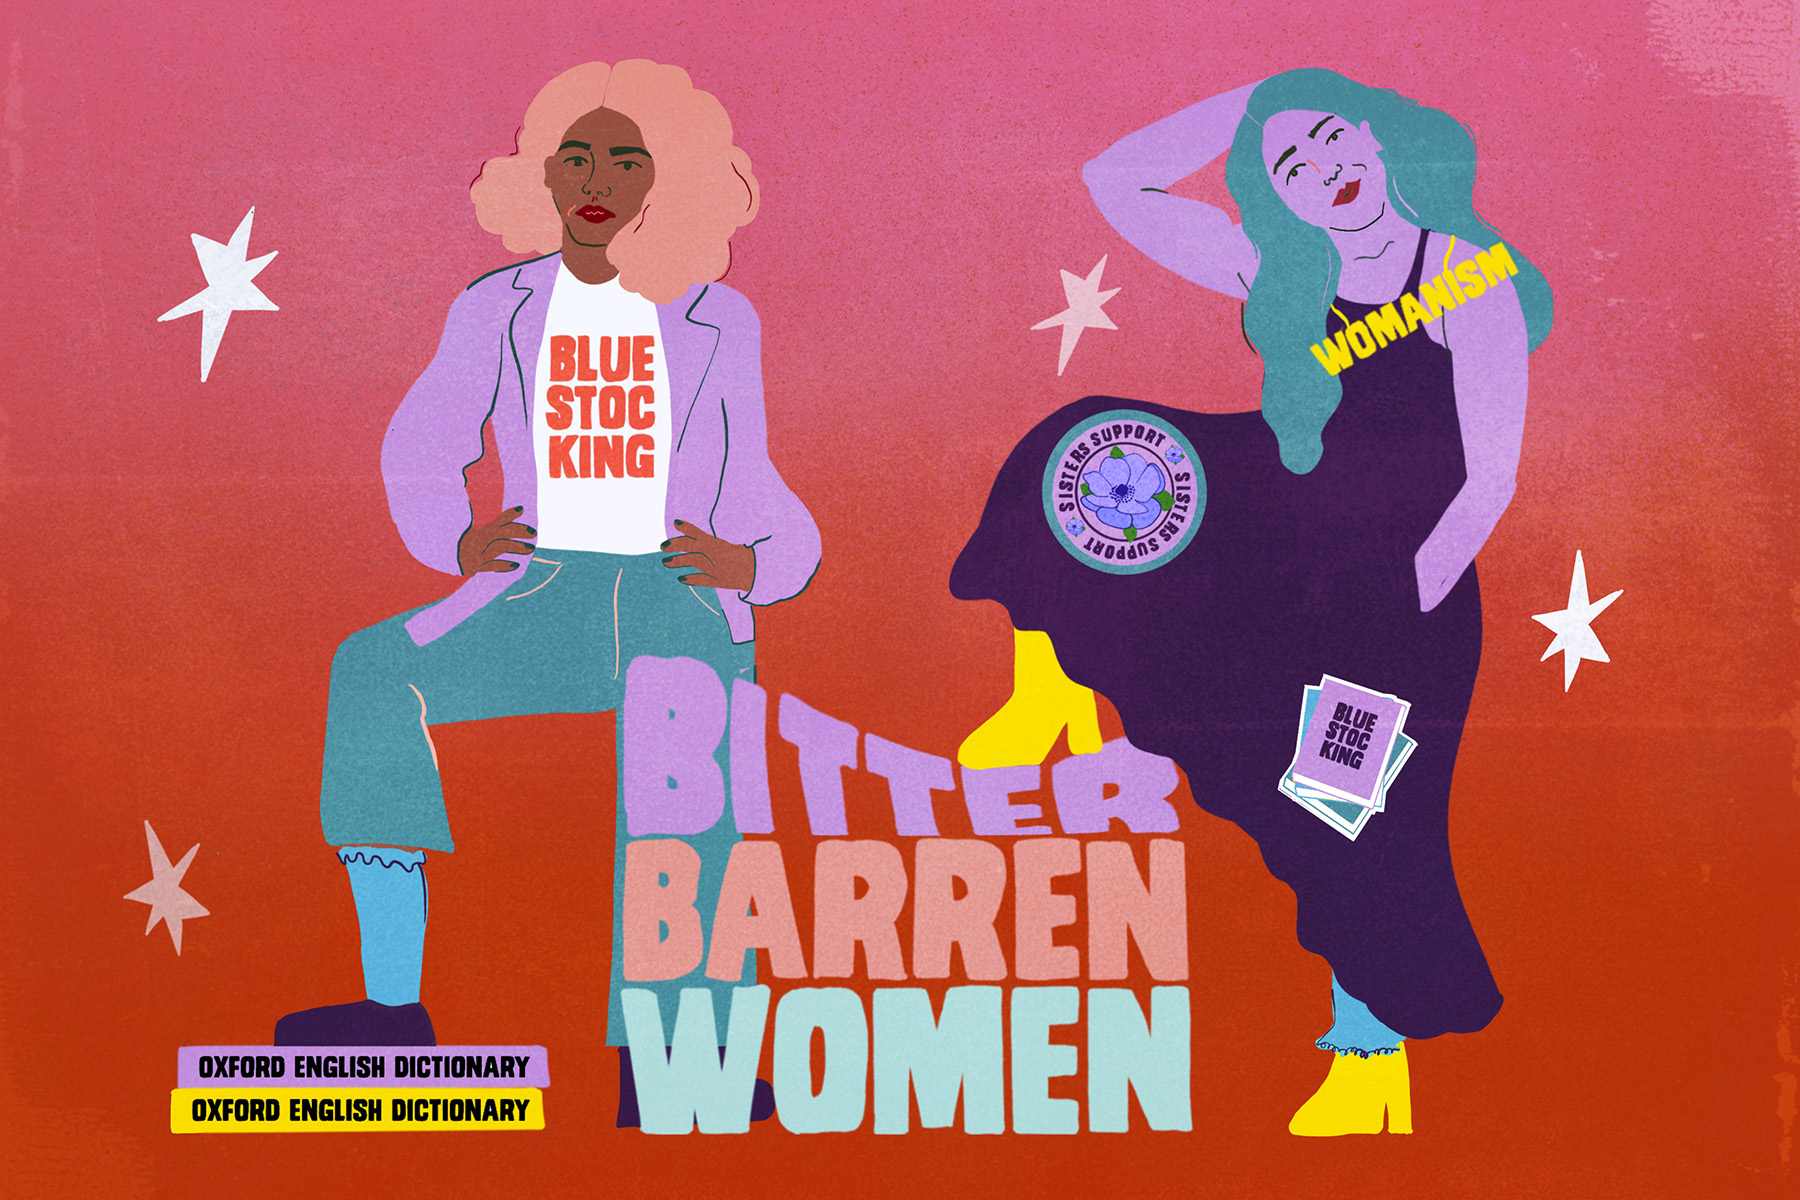 An illustration of two women surrounding the words 'Bitter barren women'